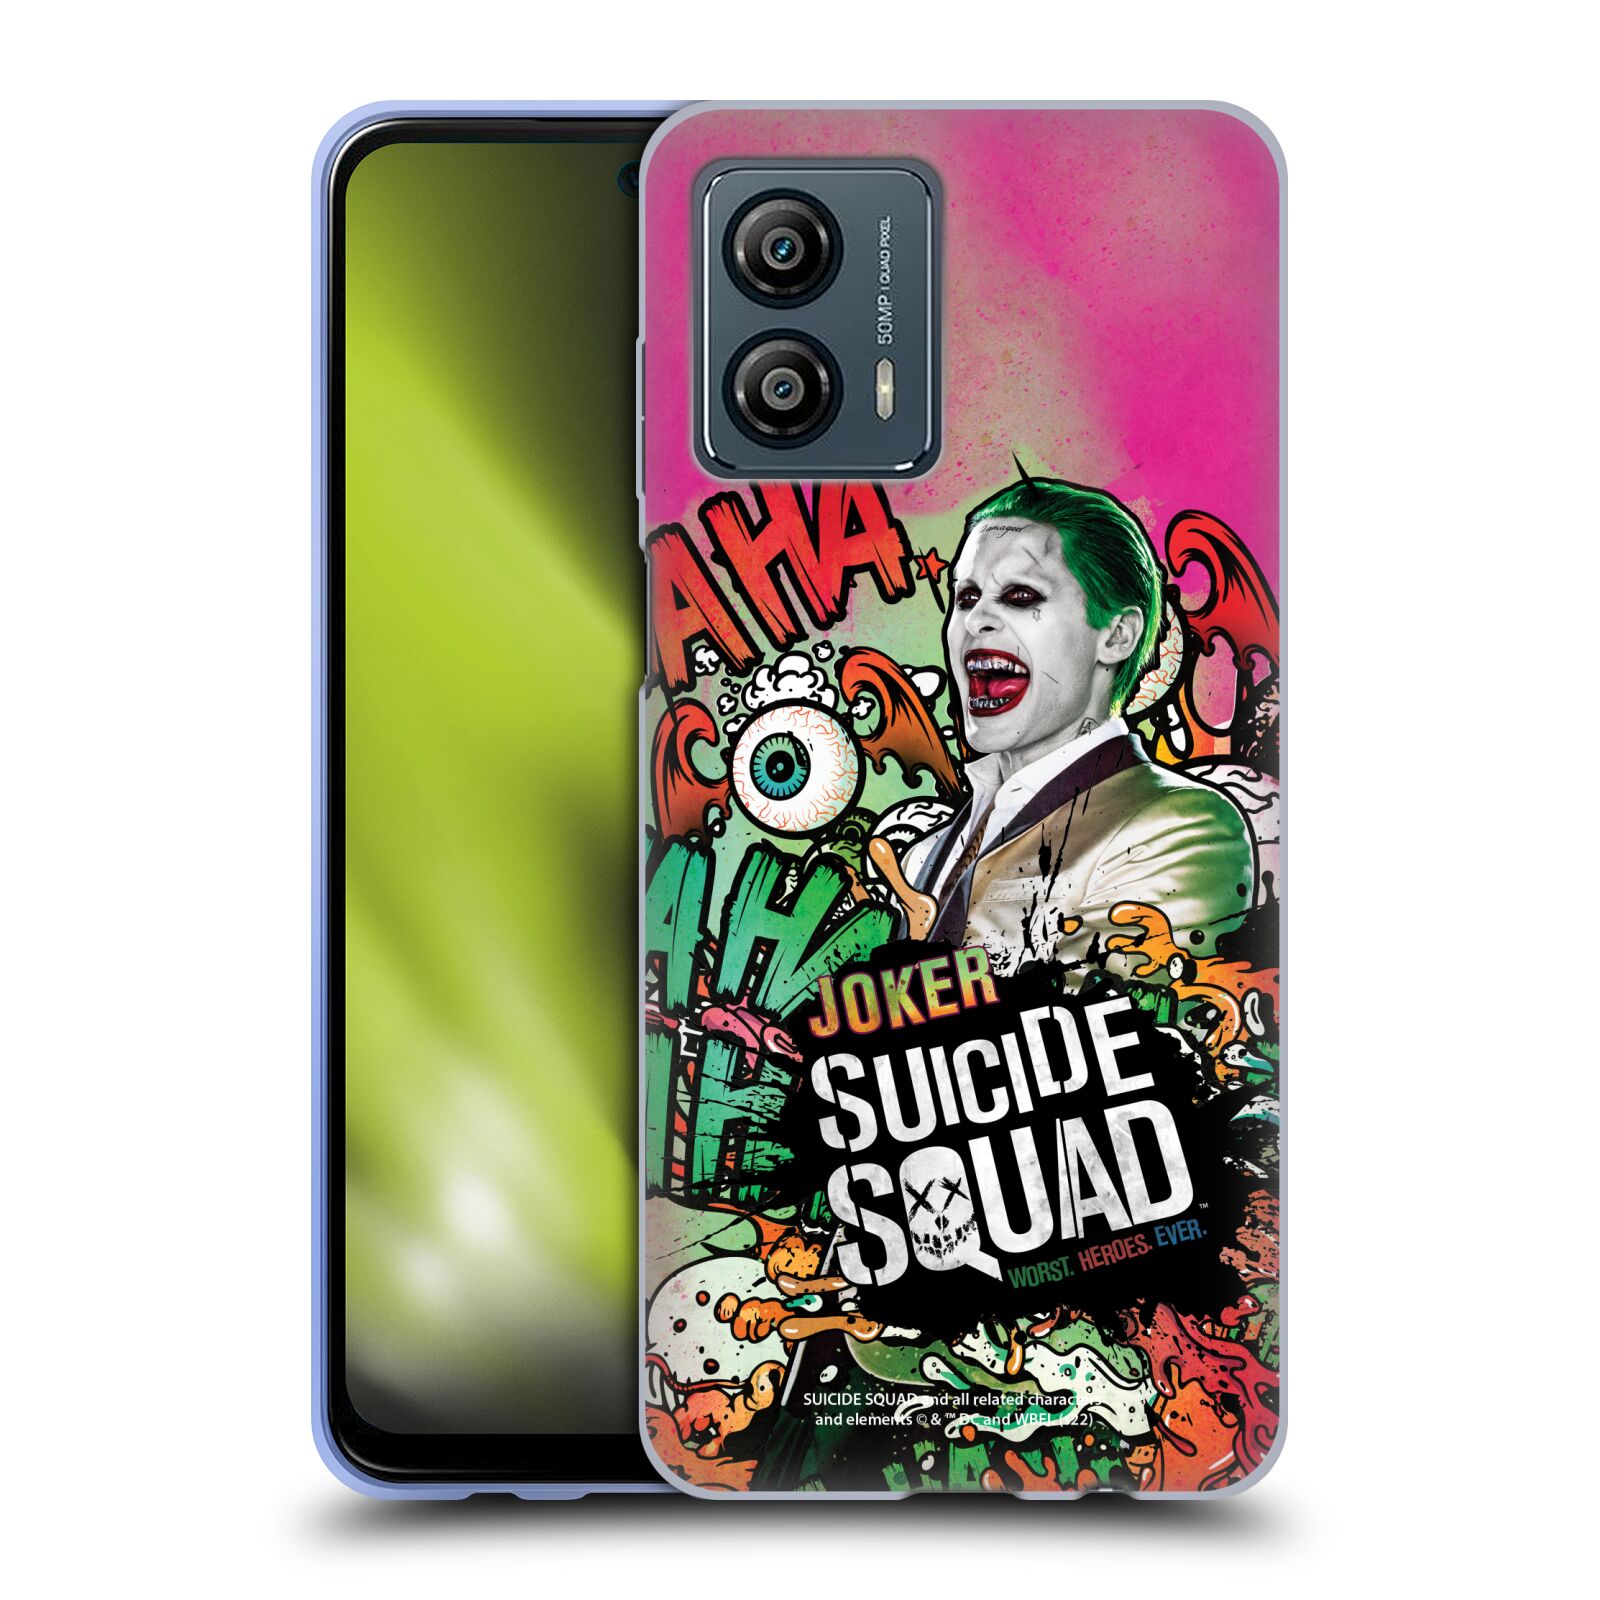 Silikonové pouzdro na mobil Motorola Moto G53 5G - Suicide Squad - Joker (Silikonový kryt, obal, pouzdro na mobilní telefon Motorola Moto G53 5G s licencovaným motivem Suicide Squad - Joker)